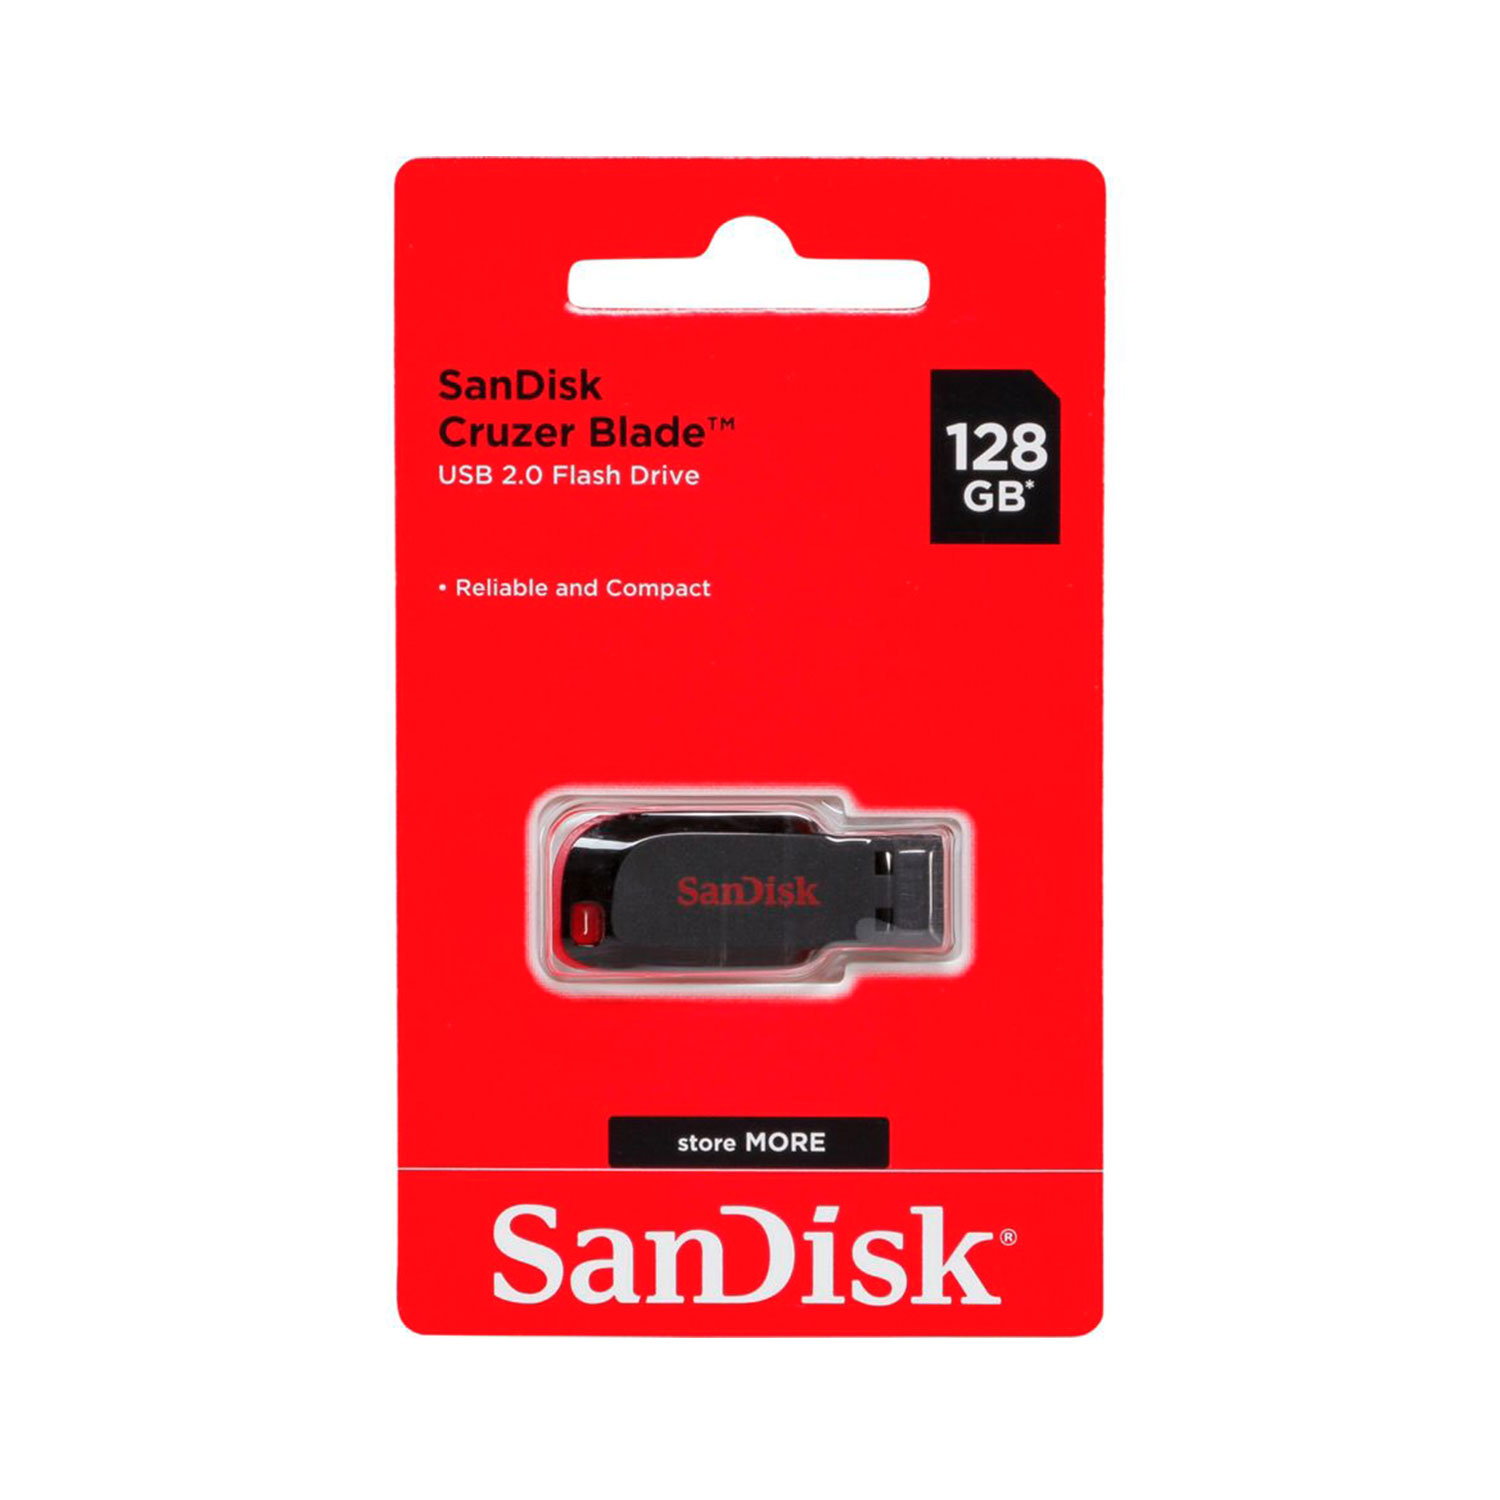 SanDisk USB-Stick Cruzer Blade 2.0 schwarz-rot 128 GB 